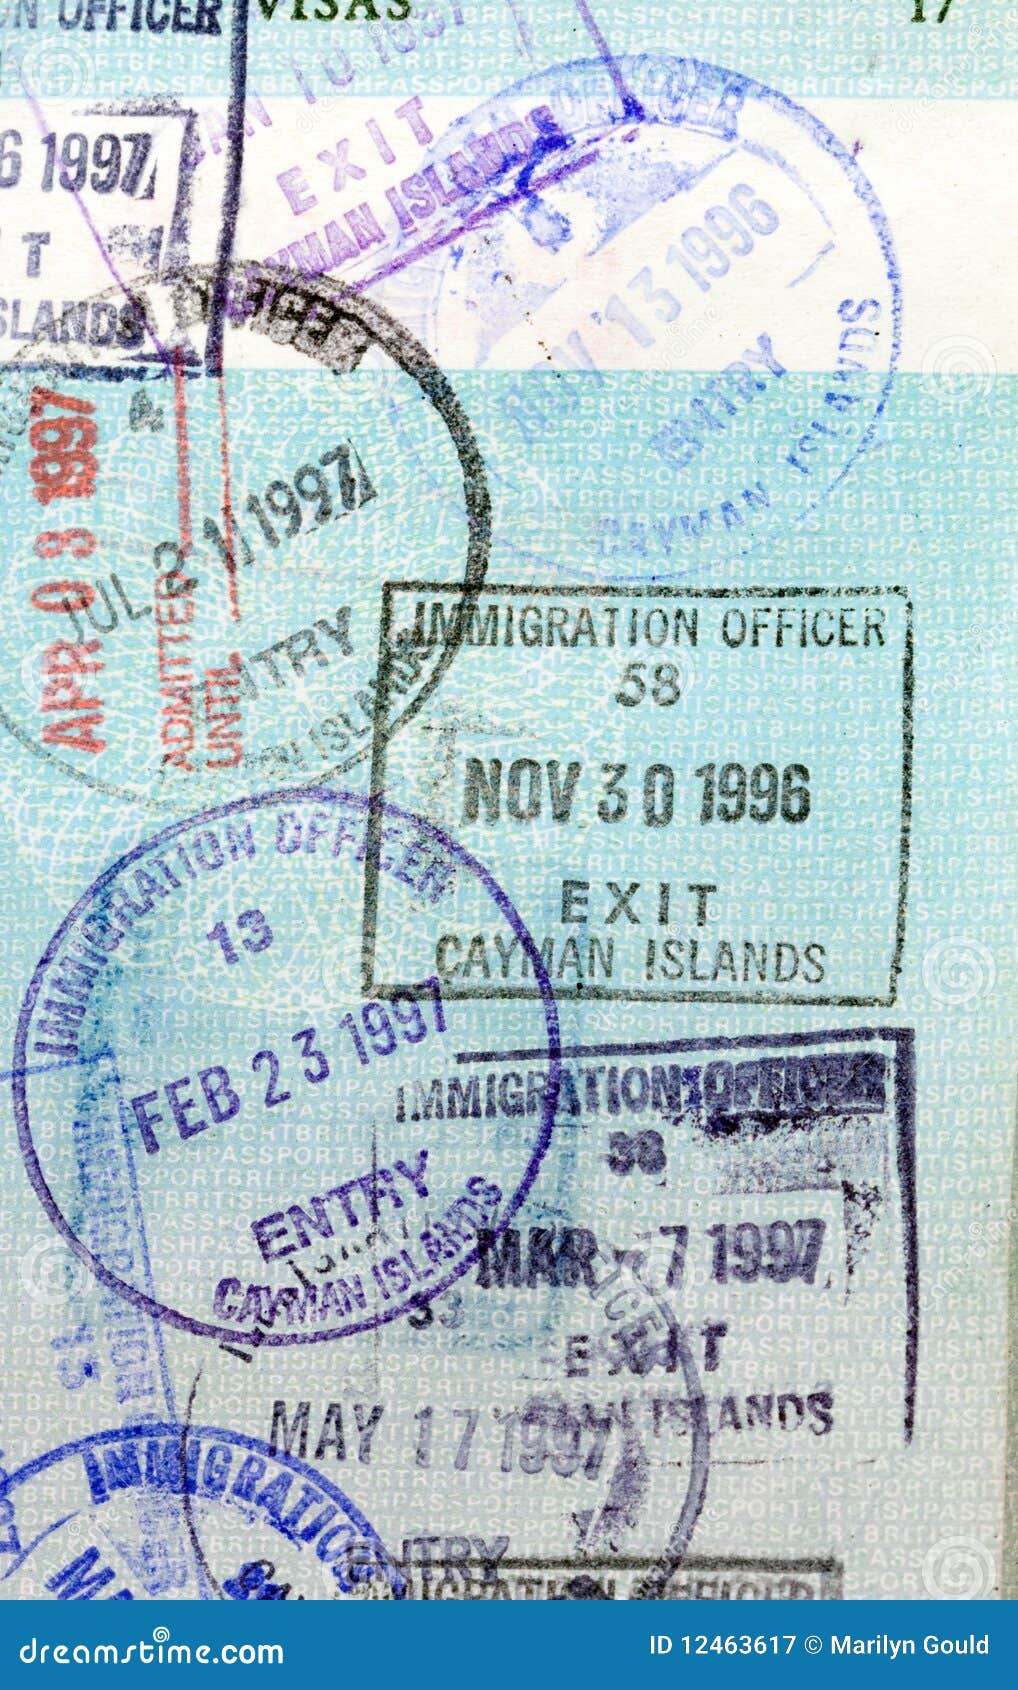 passport stamps - cayman islands